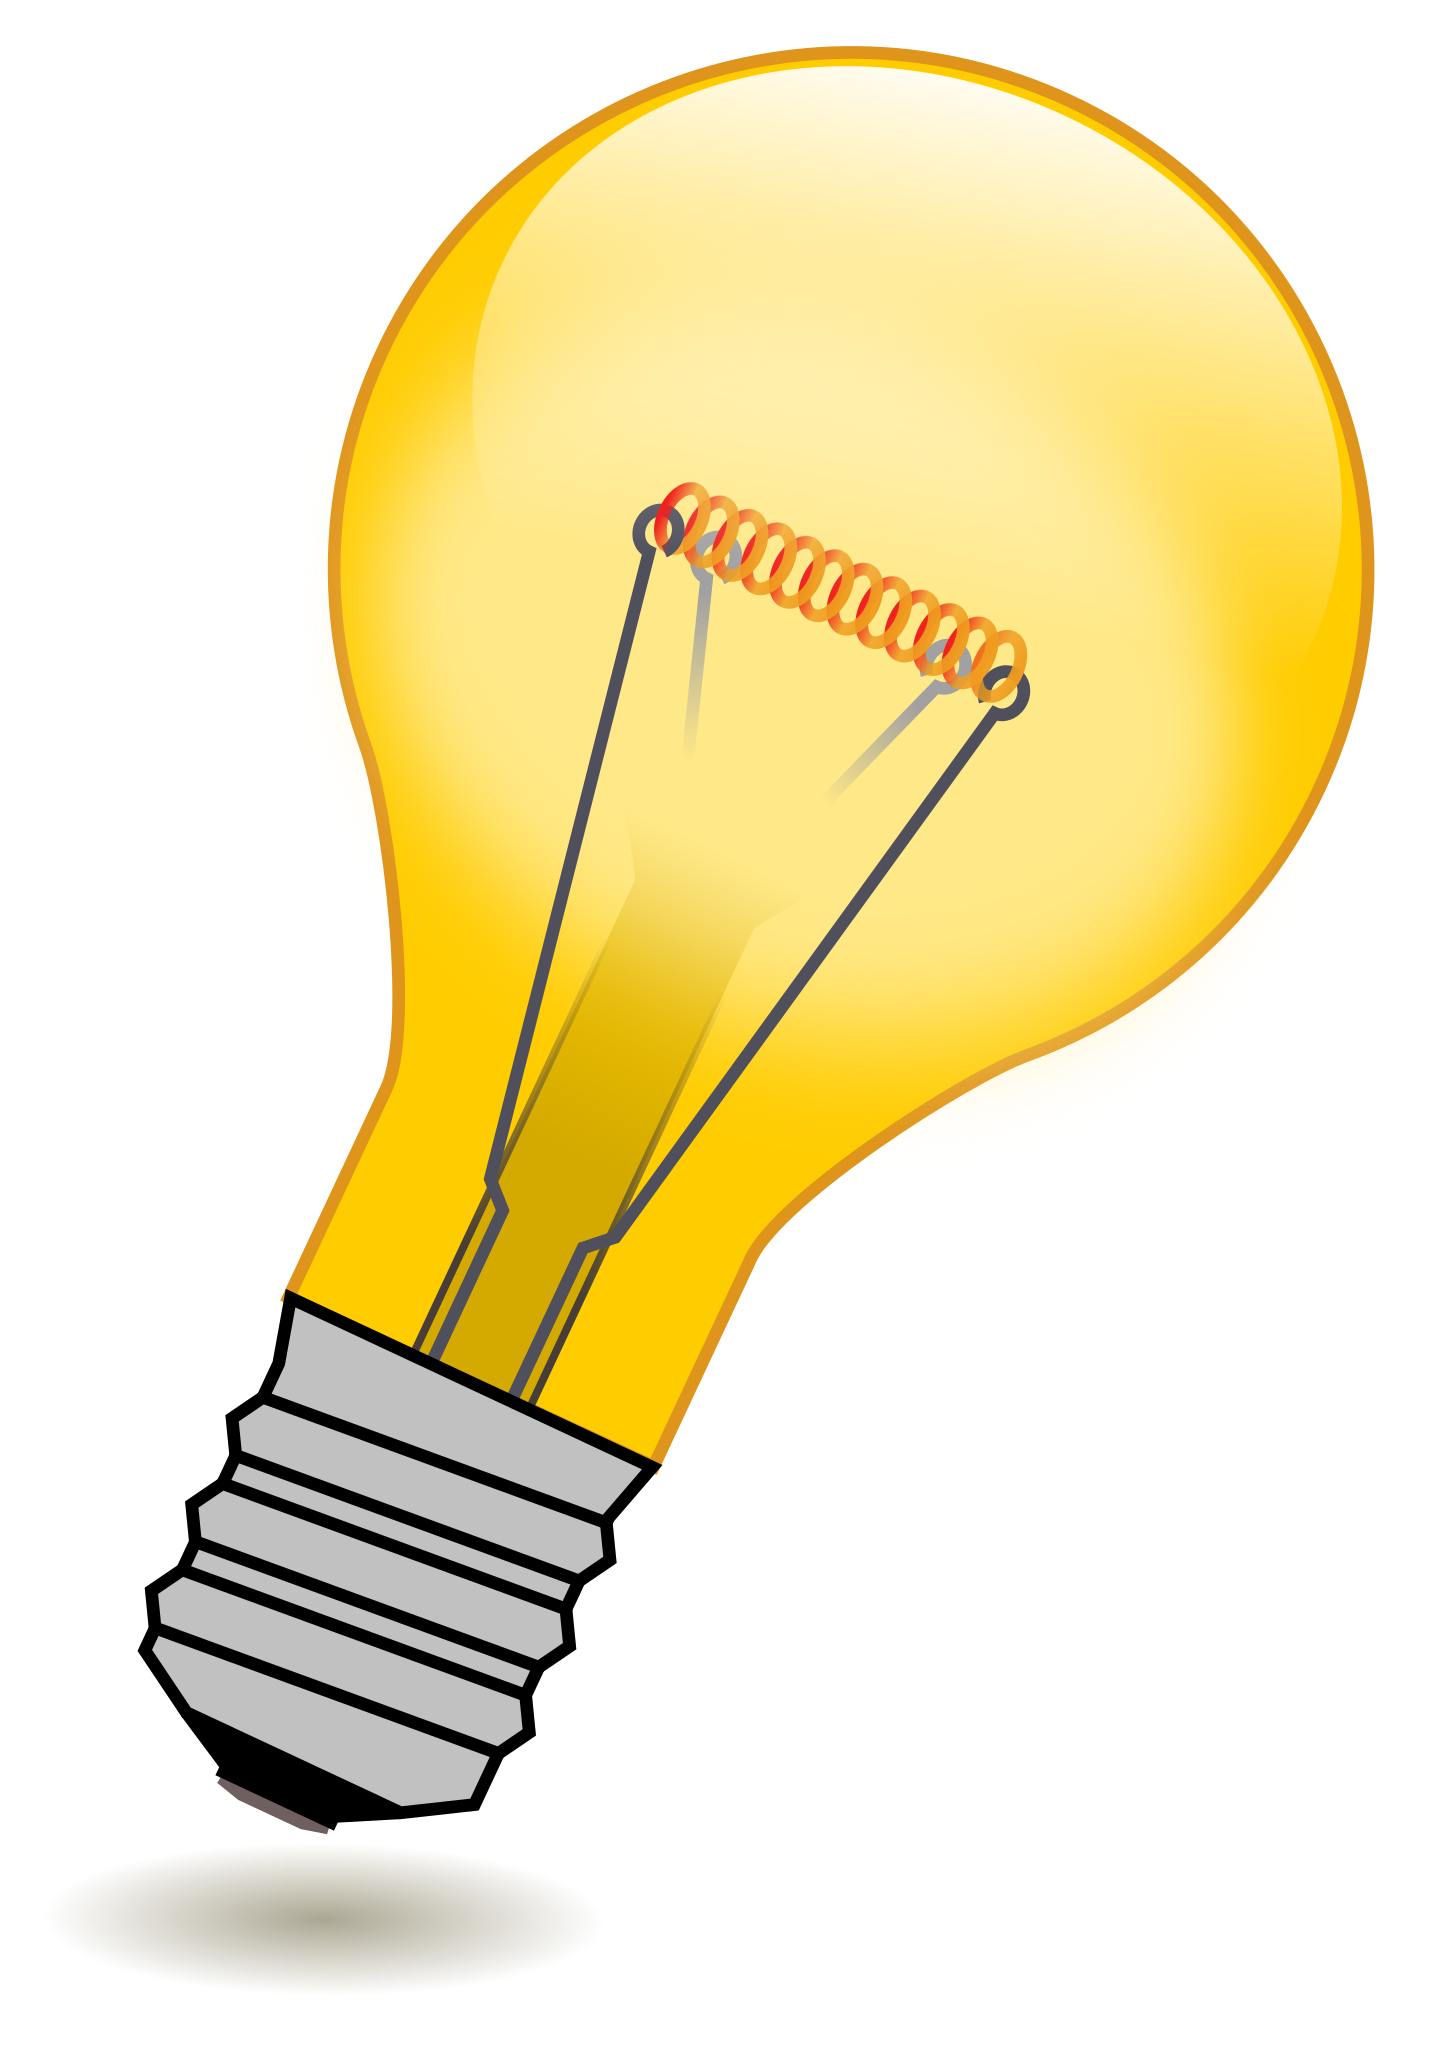 File:Light bulb icon  - Wikimedia Commons